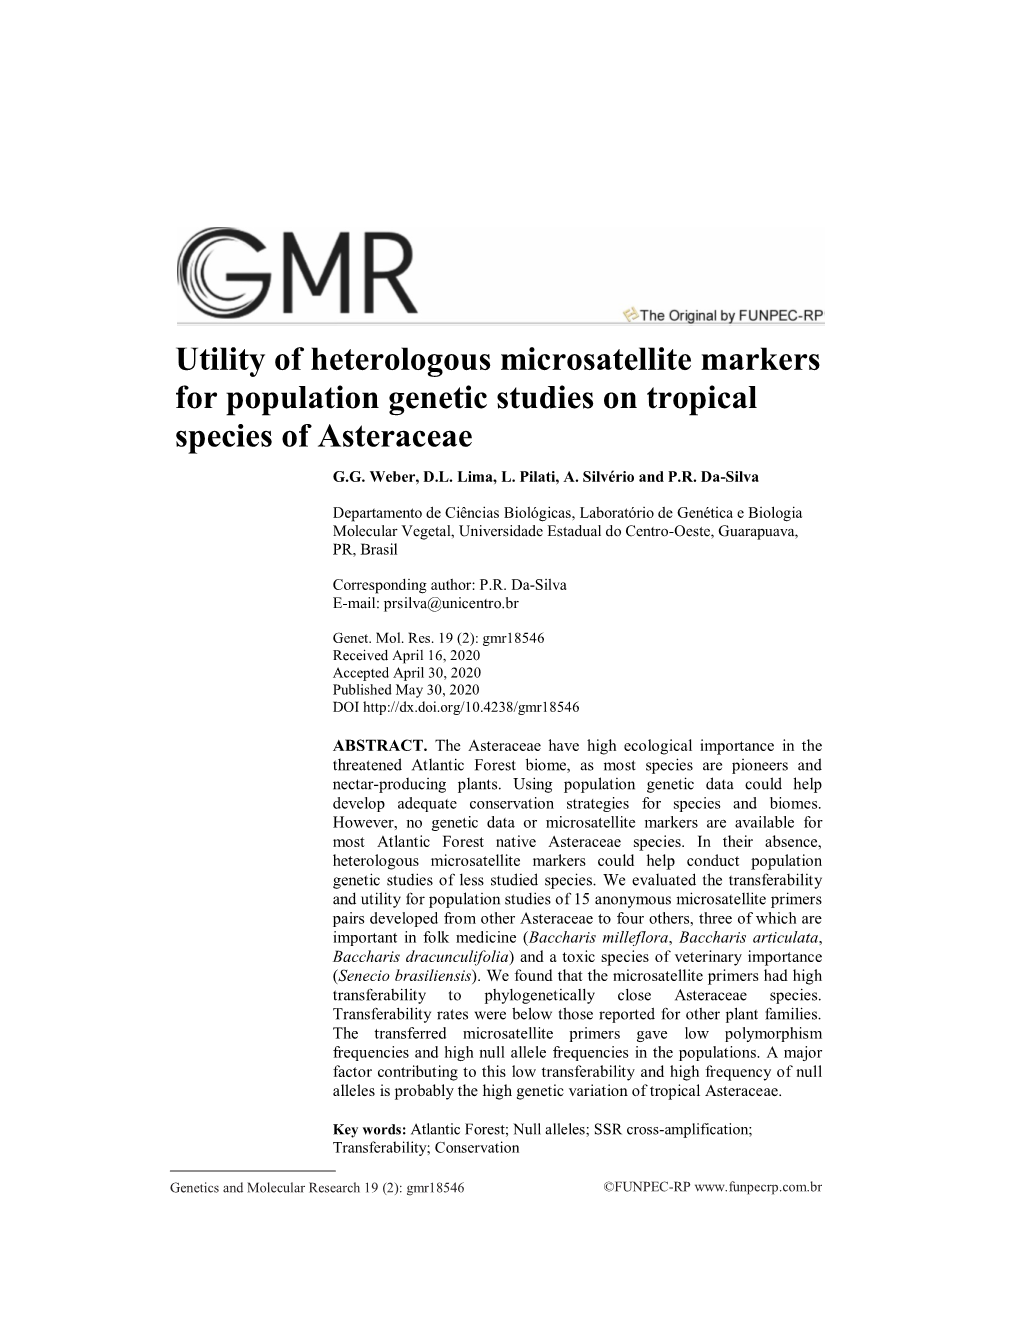 Utility of Heterologous Microsatellite Markers for Population Genetic Studies on Tropical Species of Asteraceae G.G